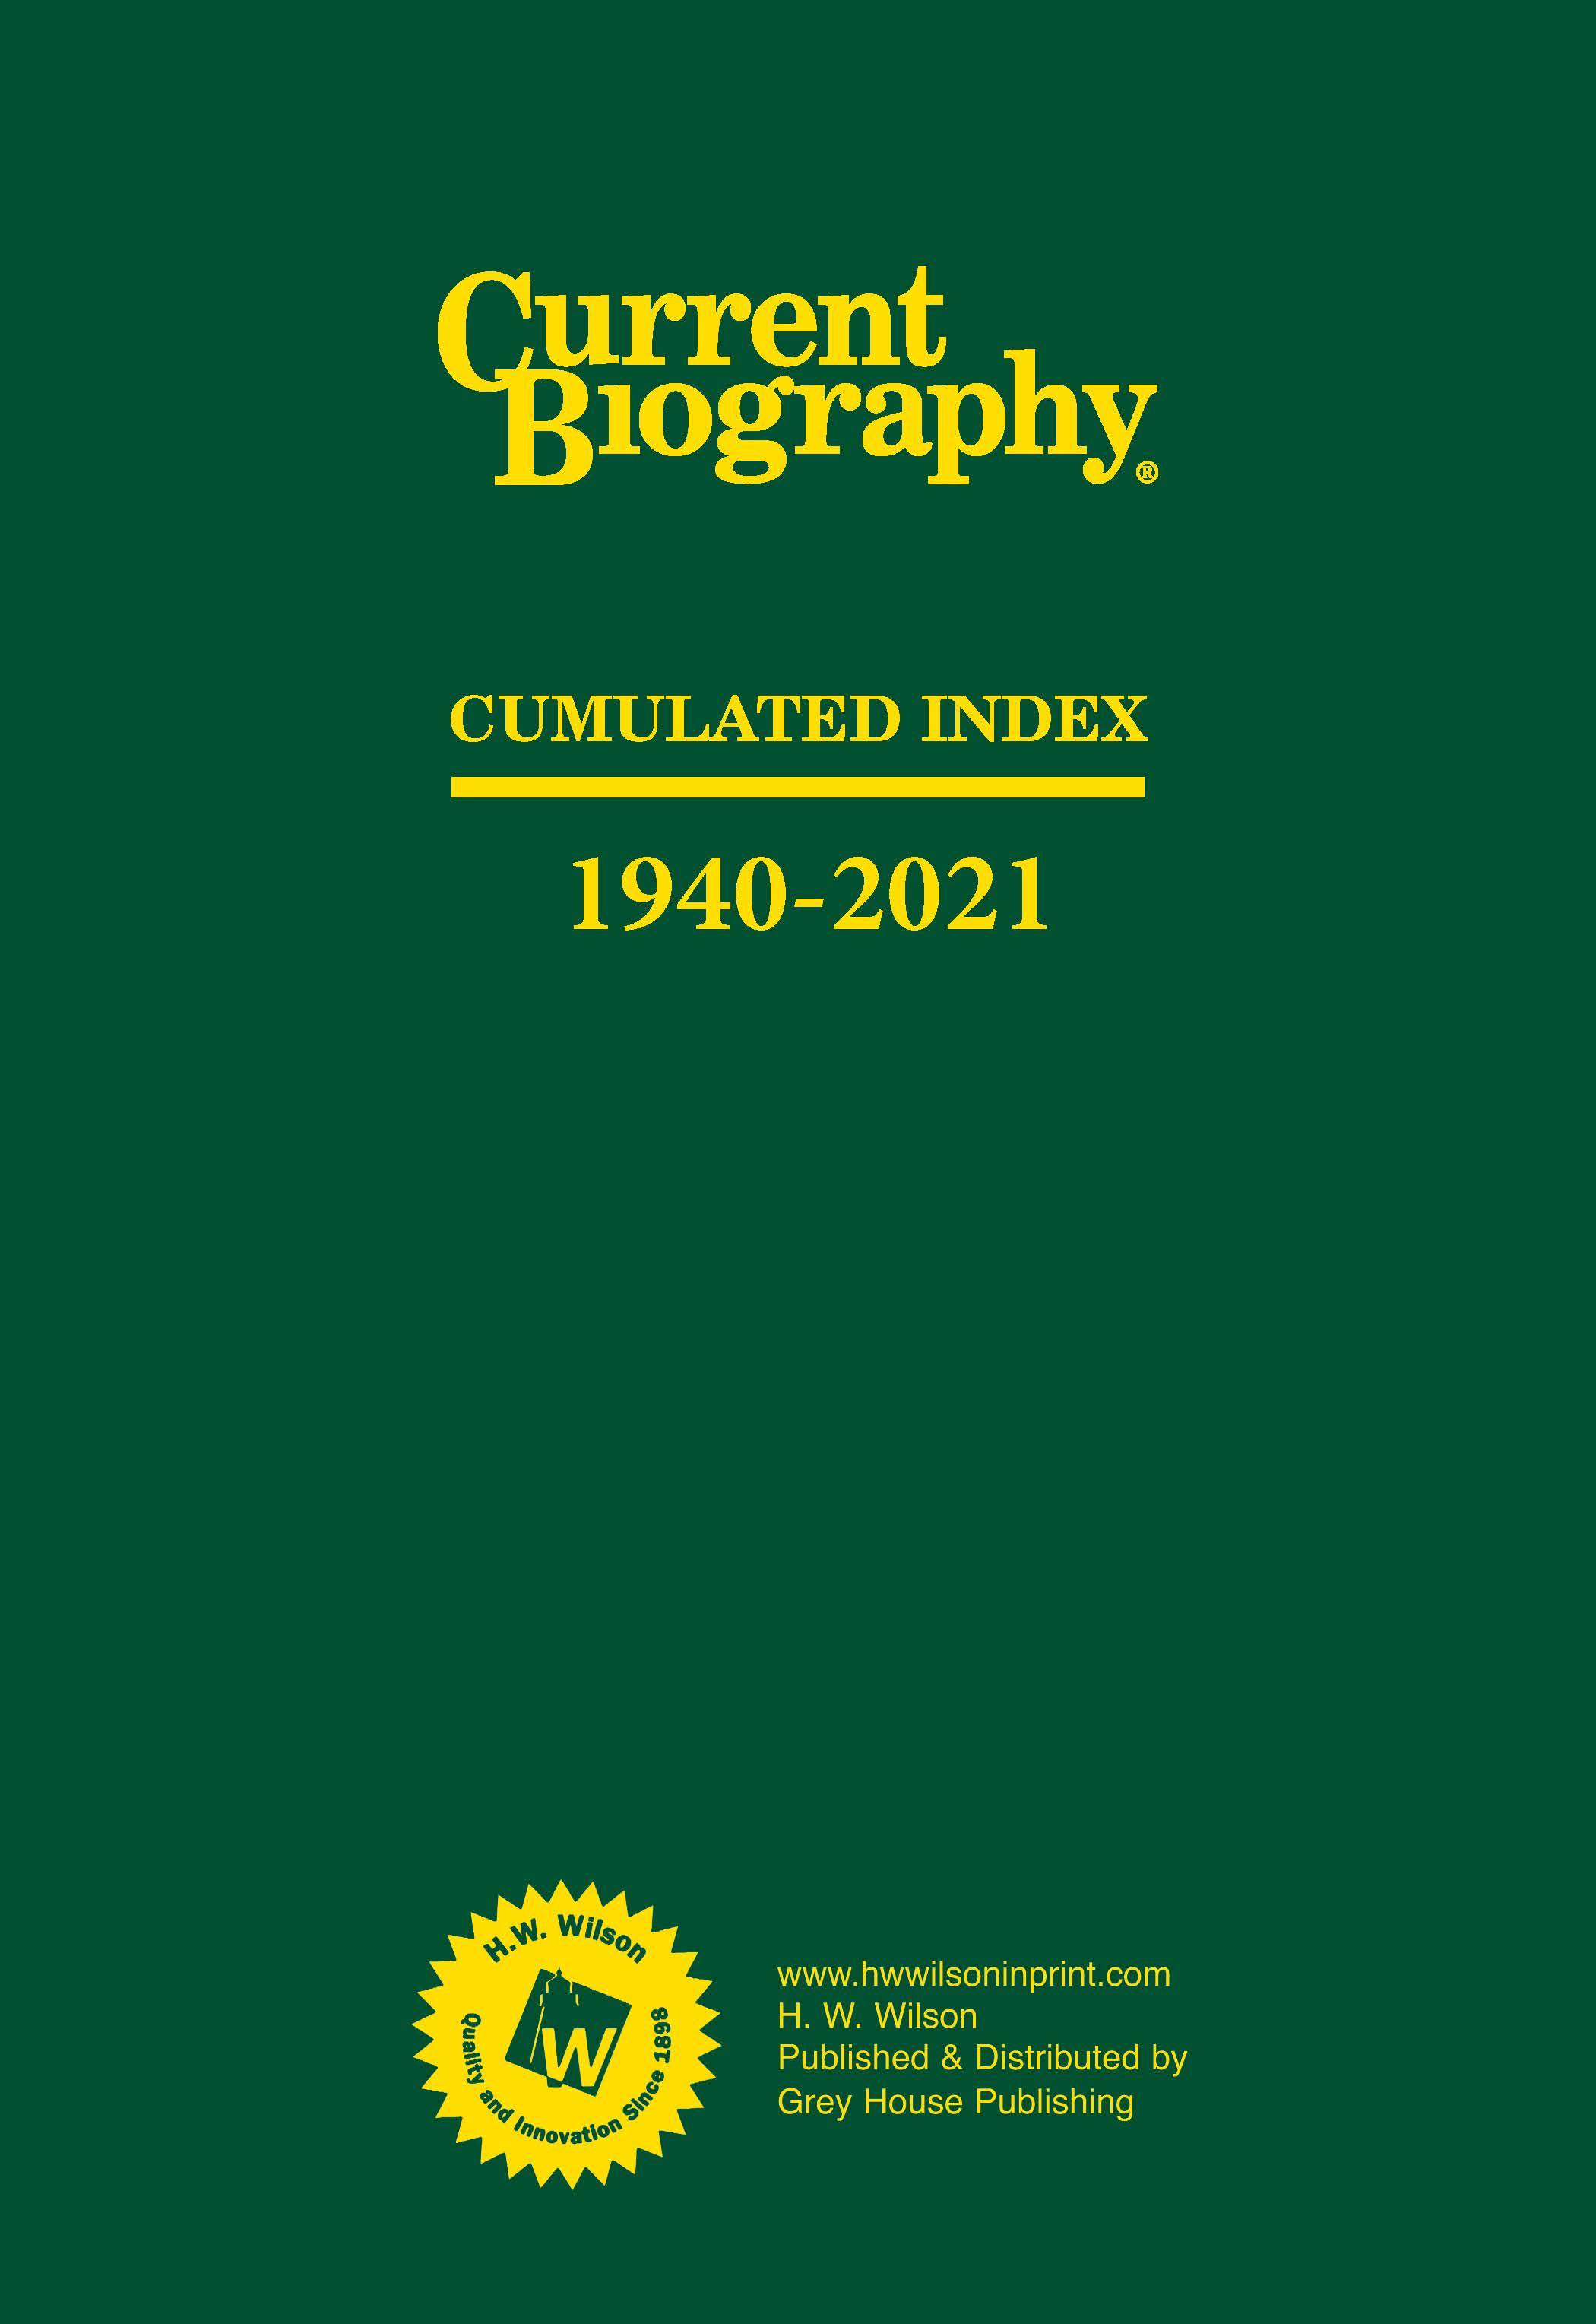 biography index online